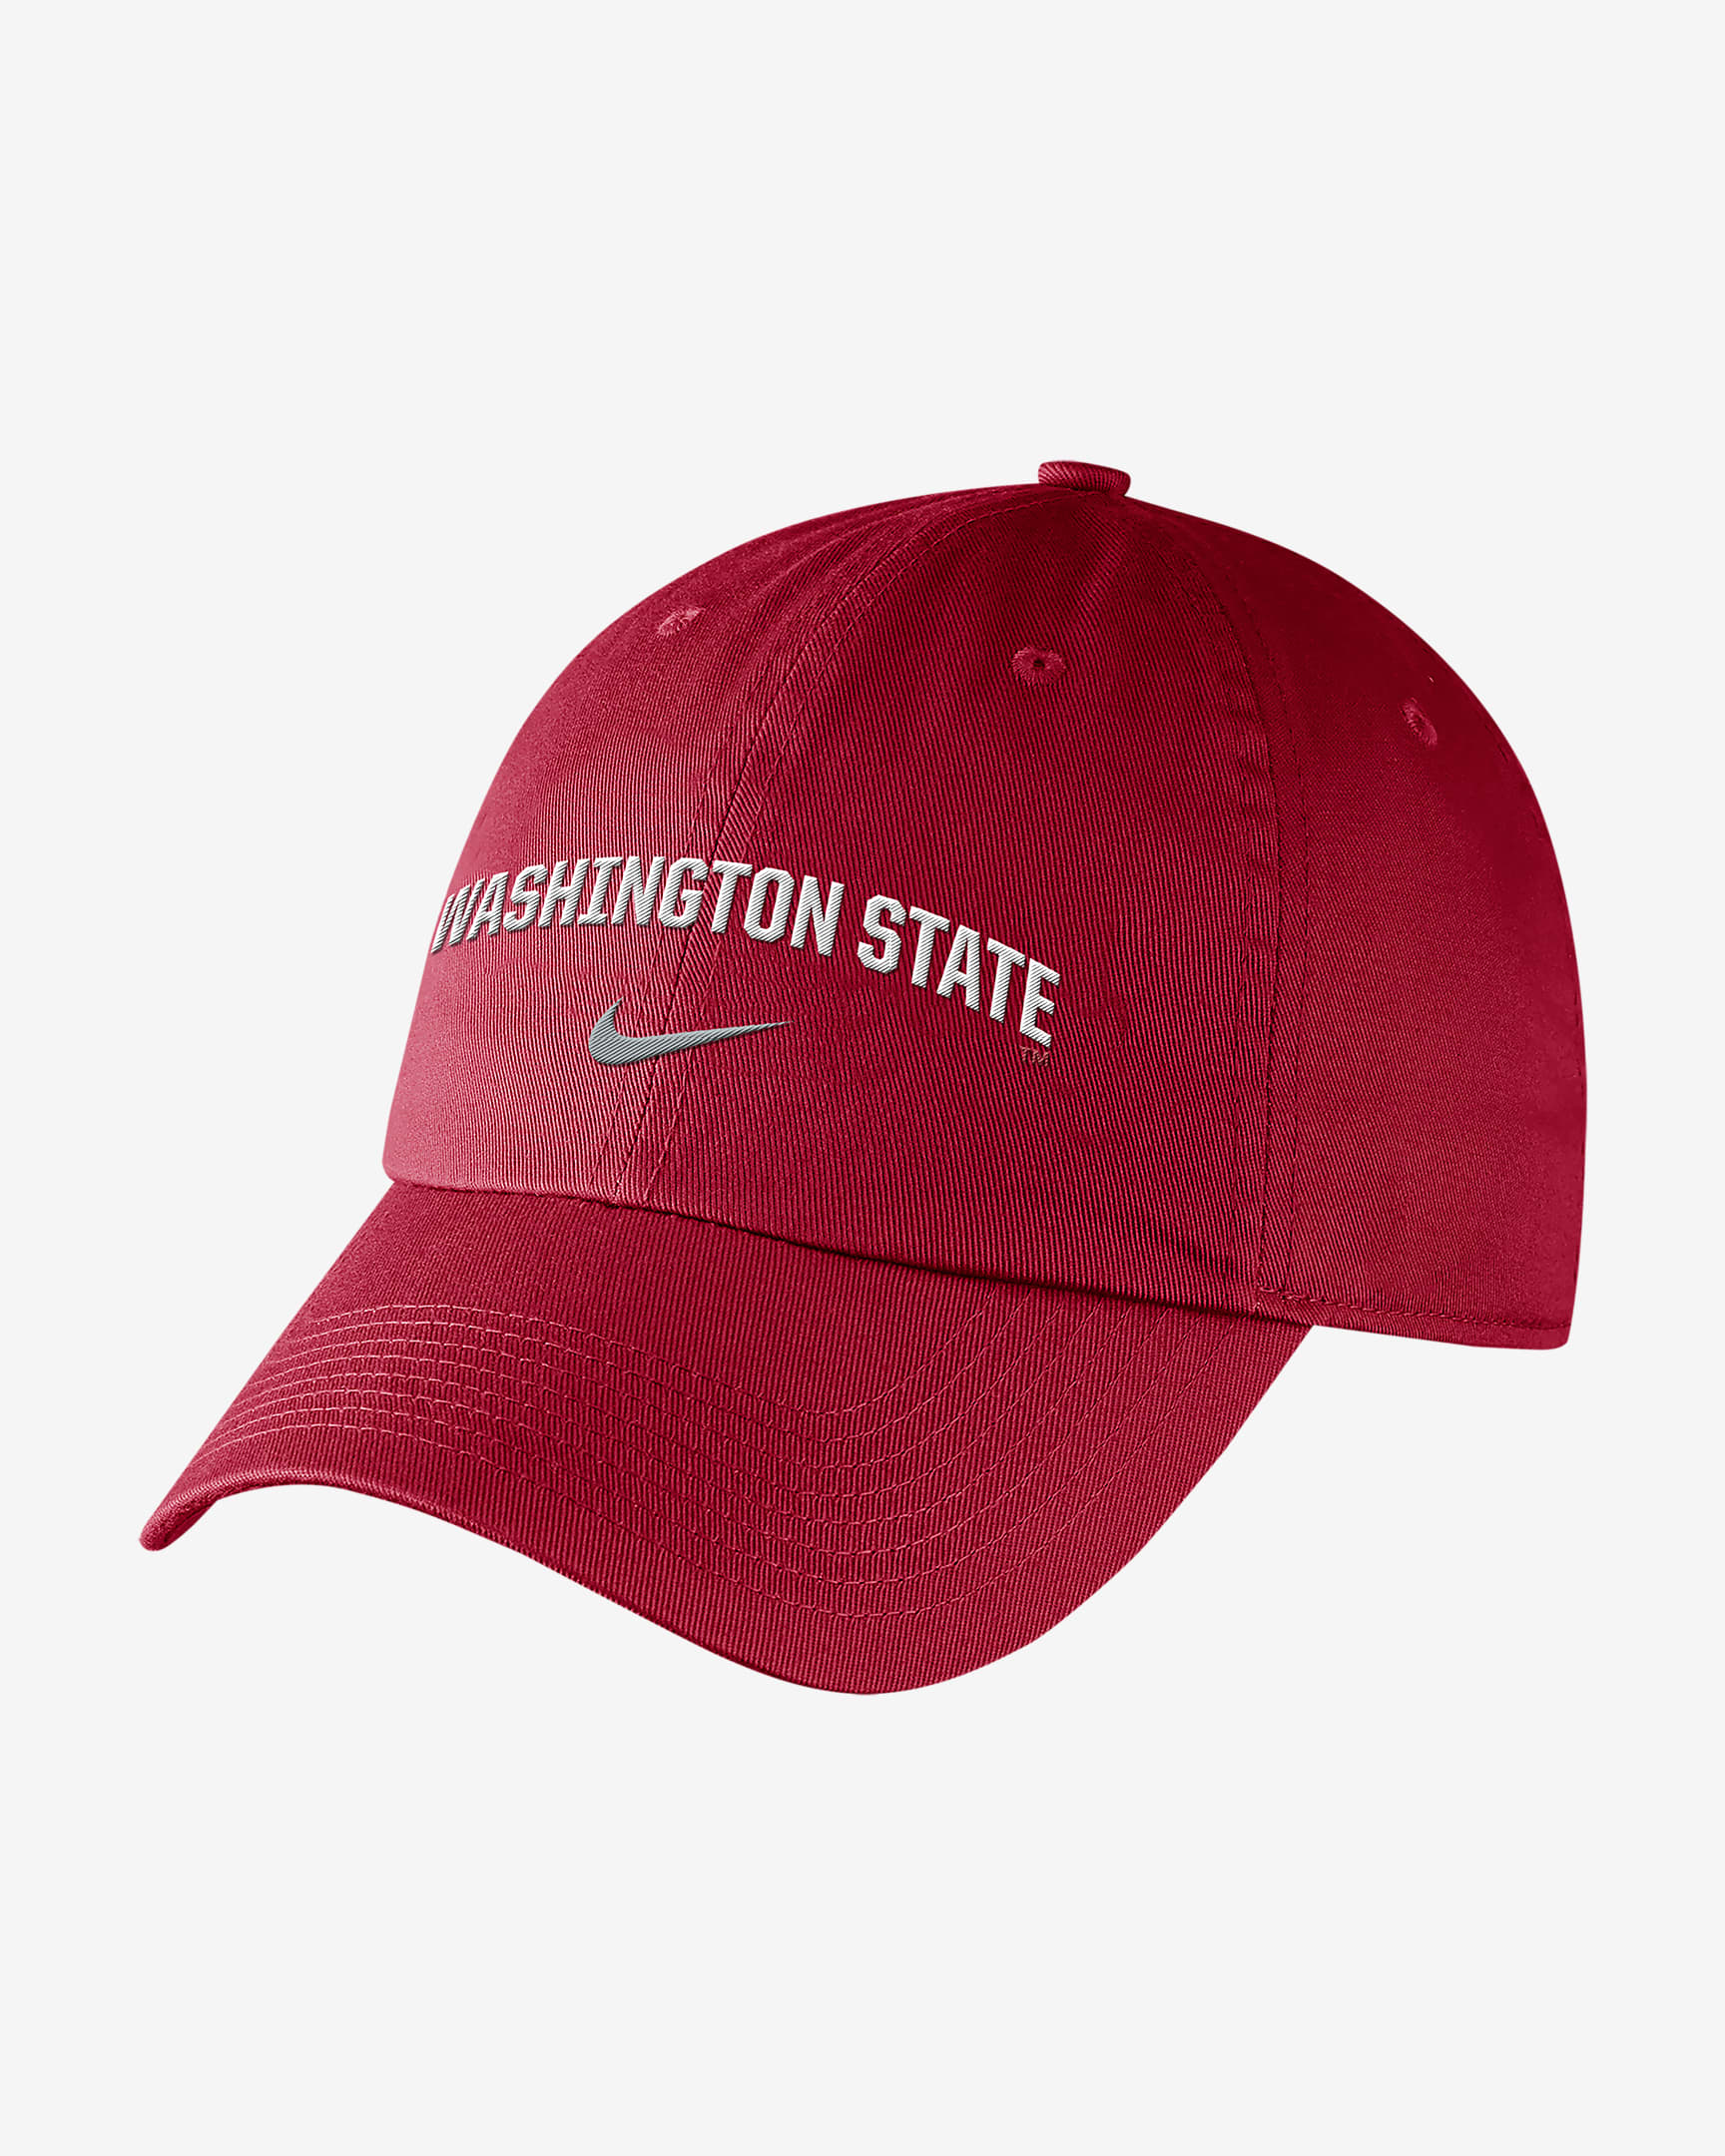 Nike College (Washington State) Hat. Nike.com